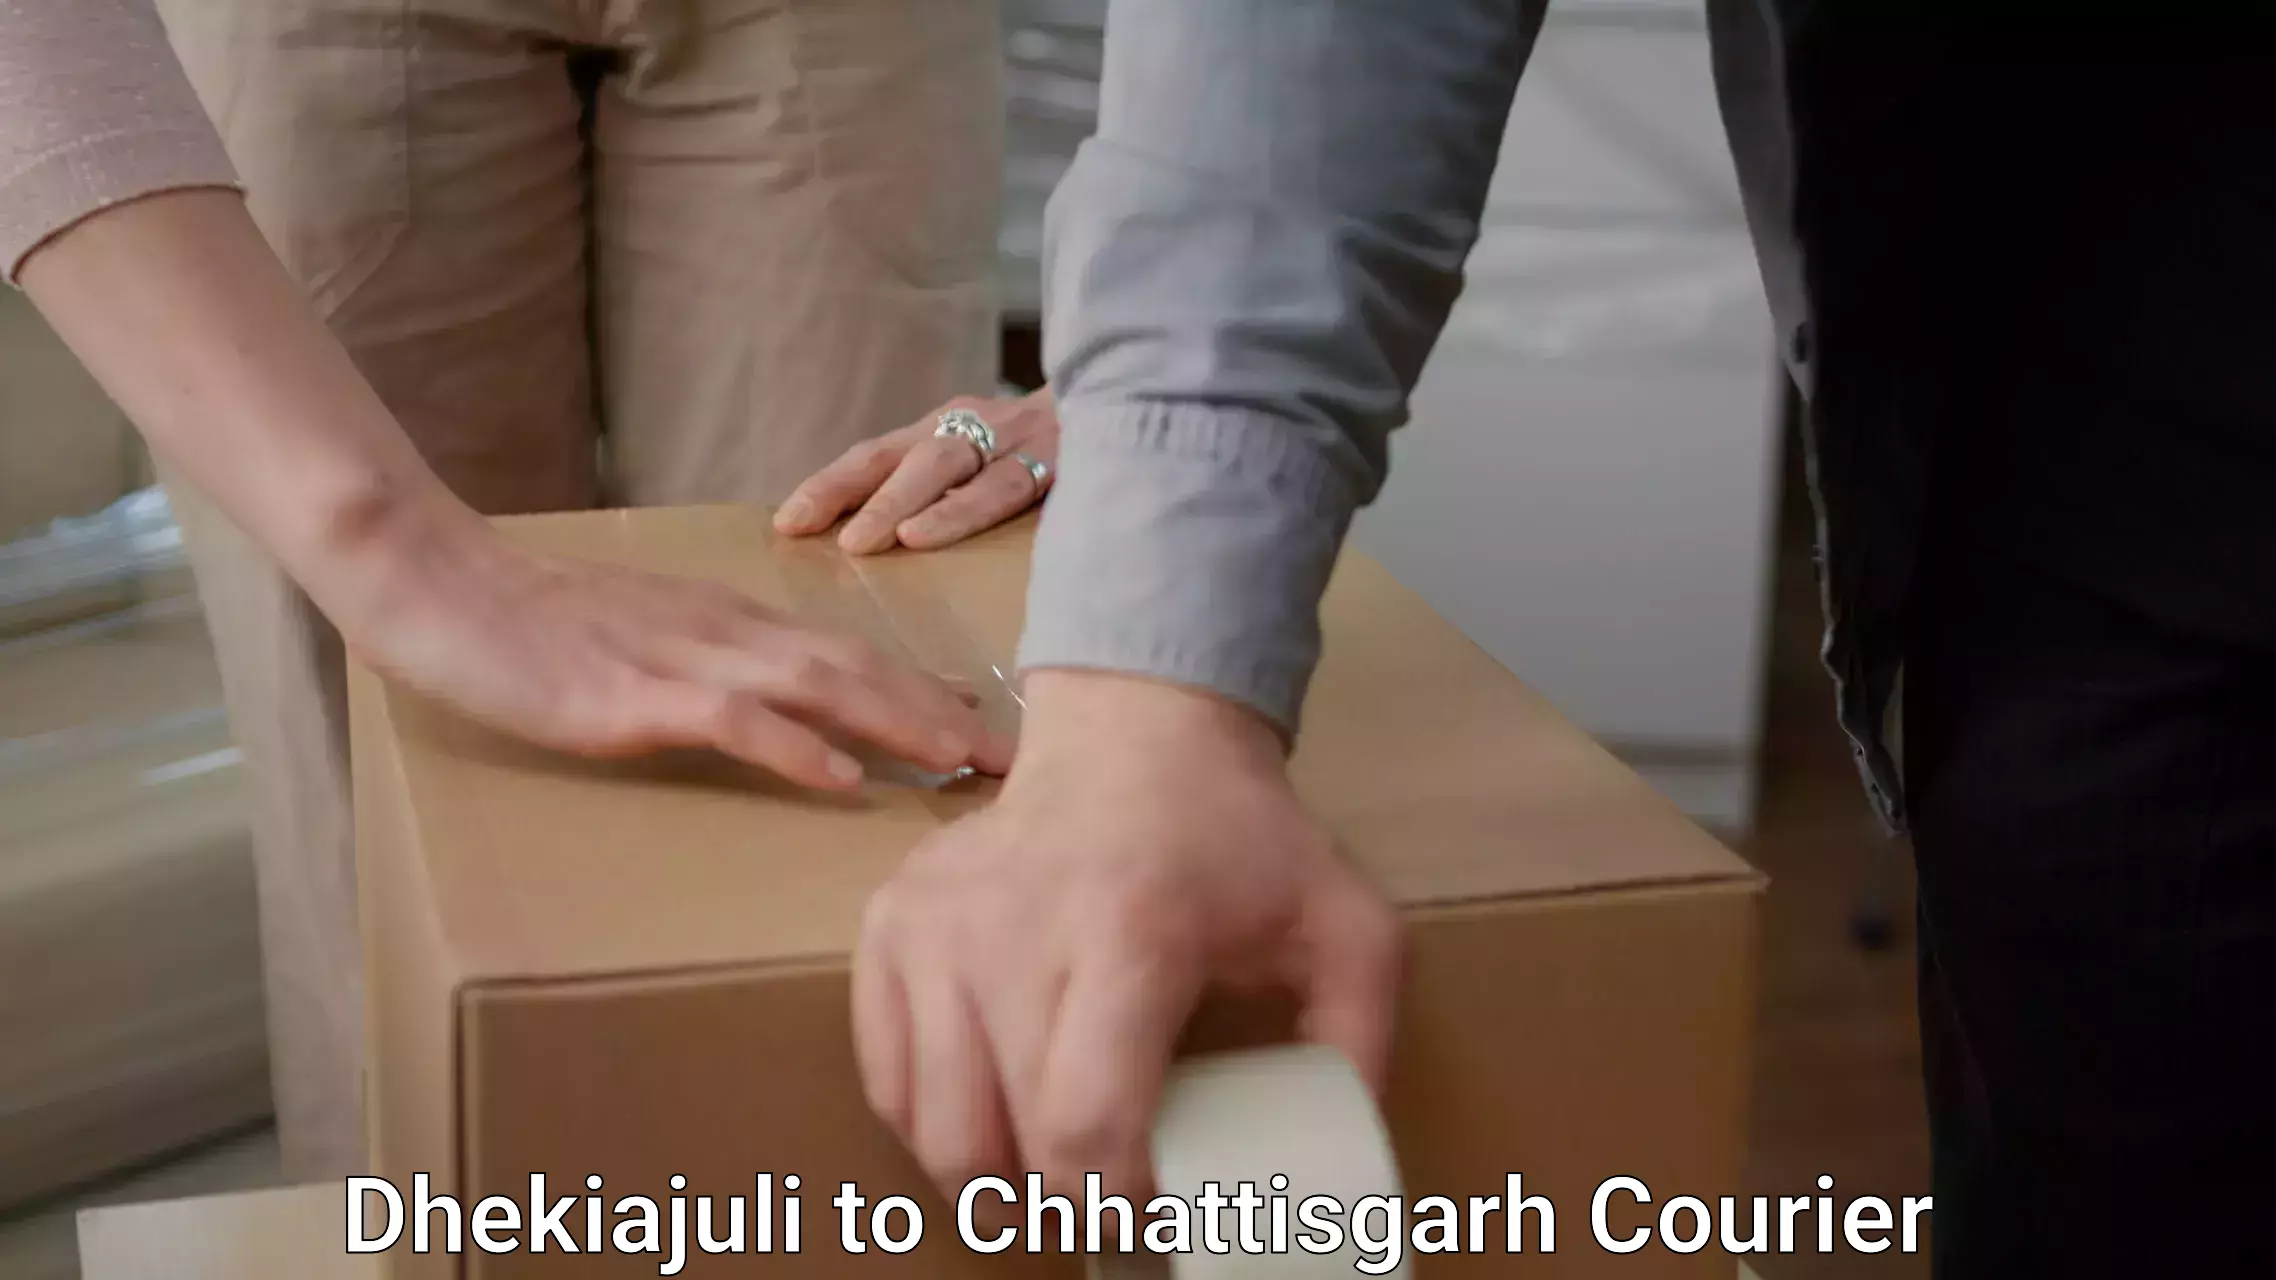 Furniture delivery service Dhekiajuli to Raigarh